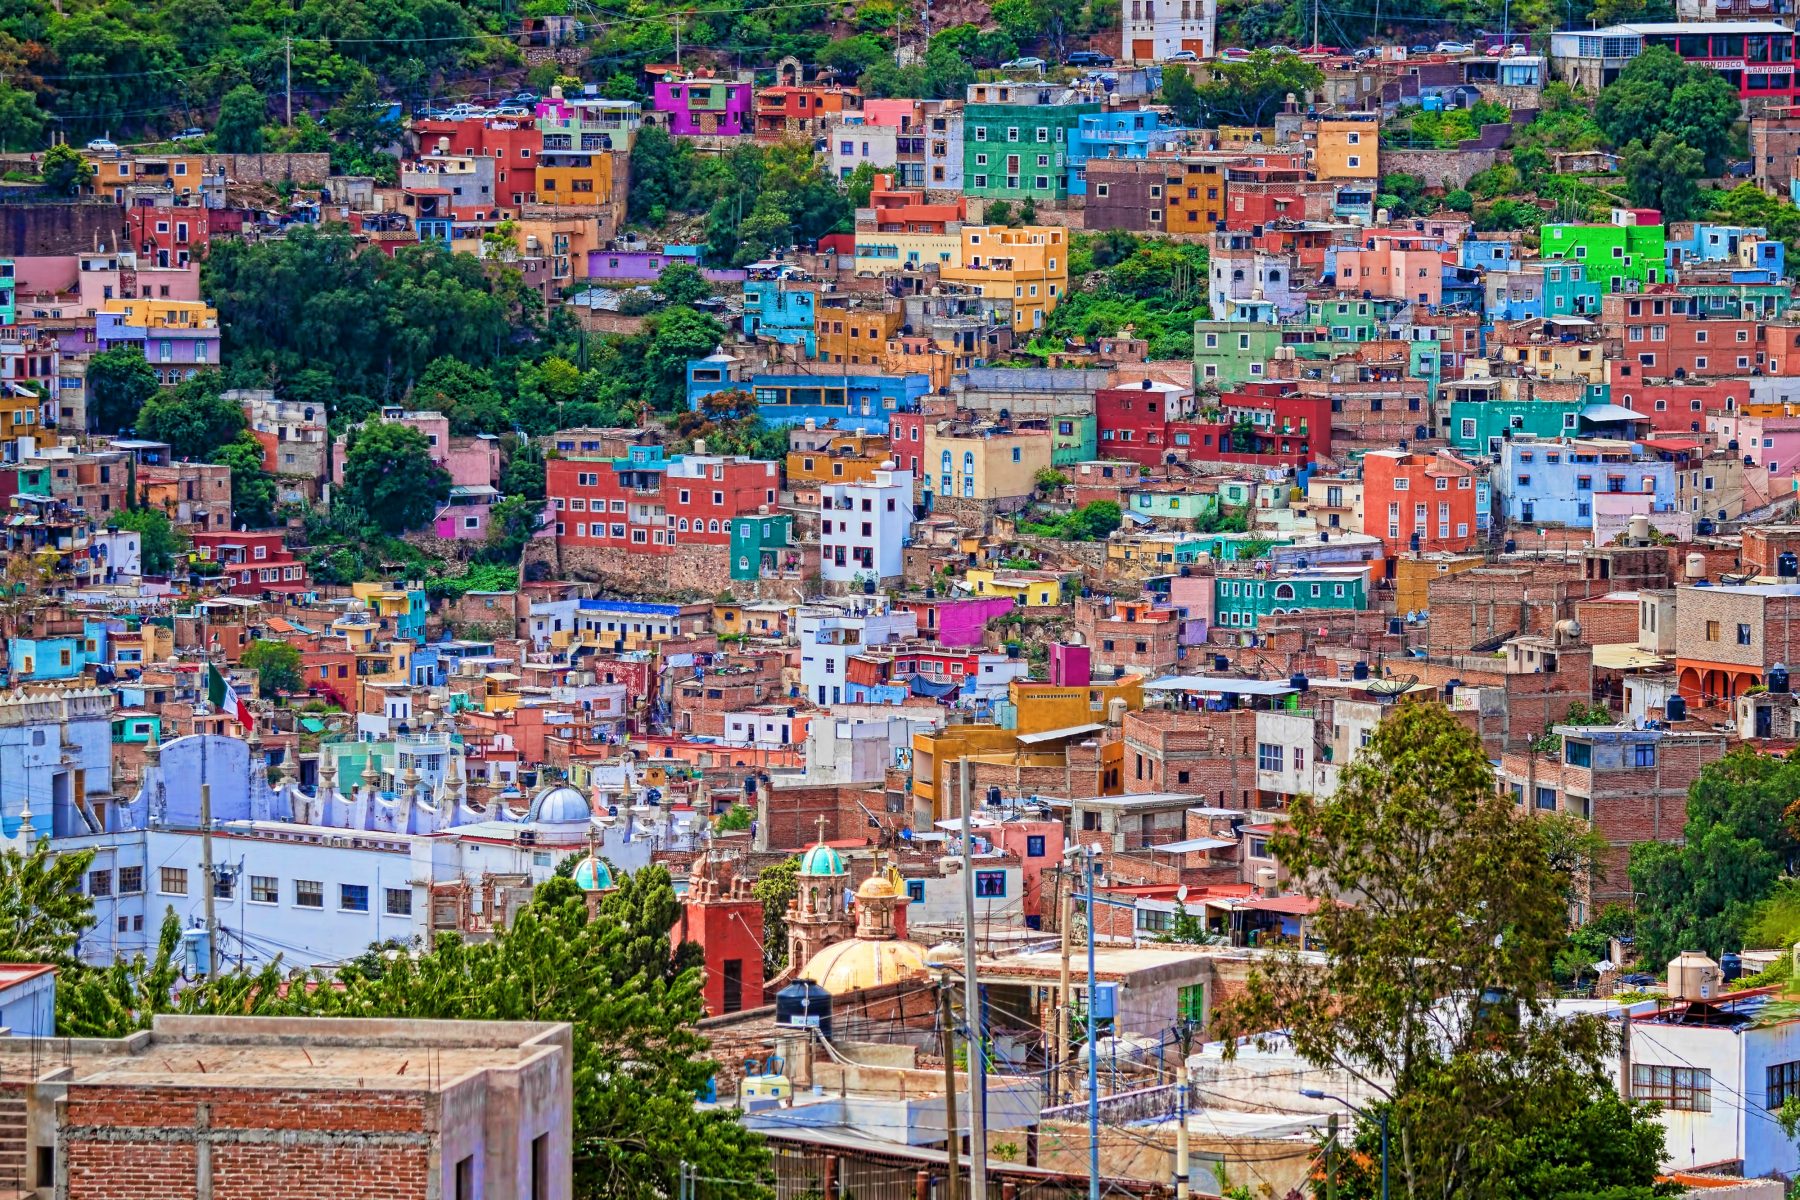 Colorful hilltop houses in Guanajuato, Mexico